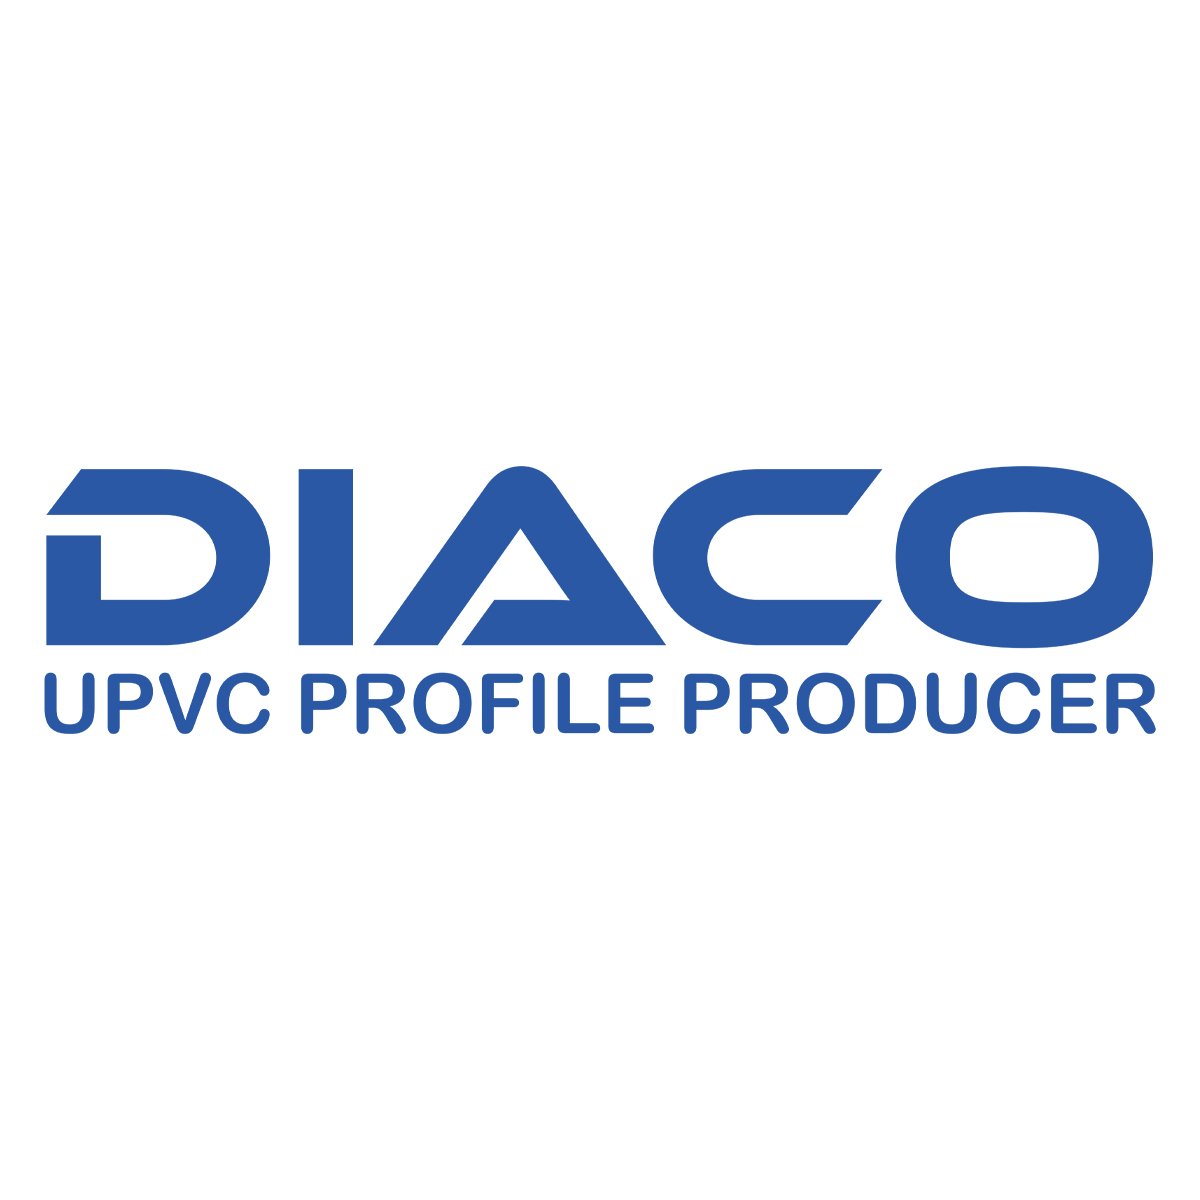 تکنسین فنی | Technical Technician - دیاکو پروفیل | Diaco Profile